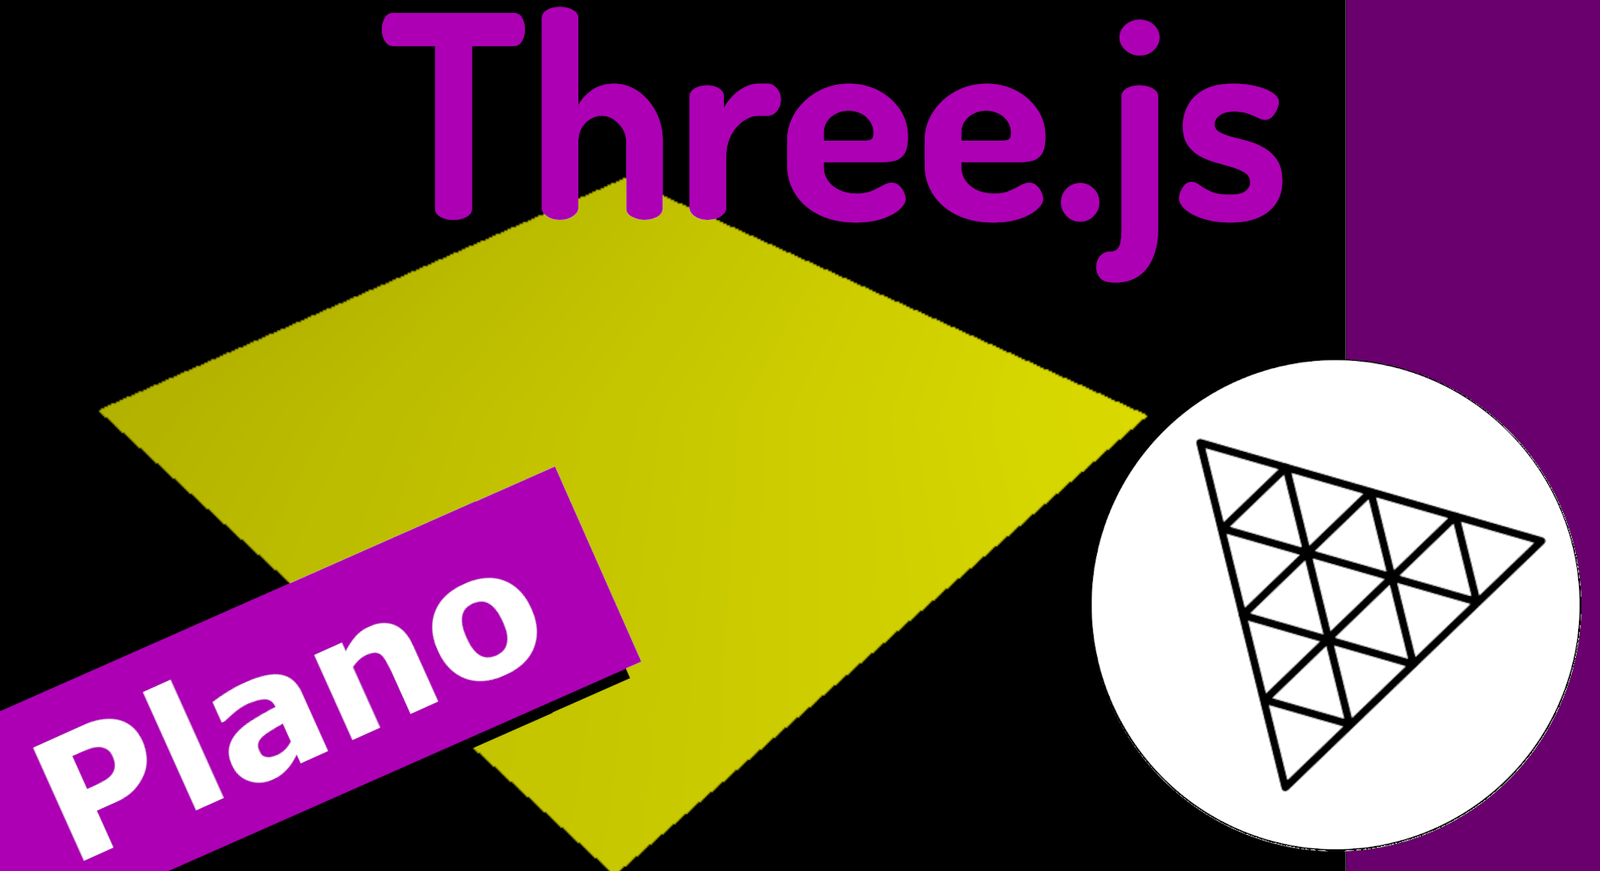 Create a plane in Three.js